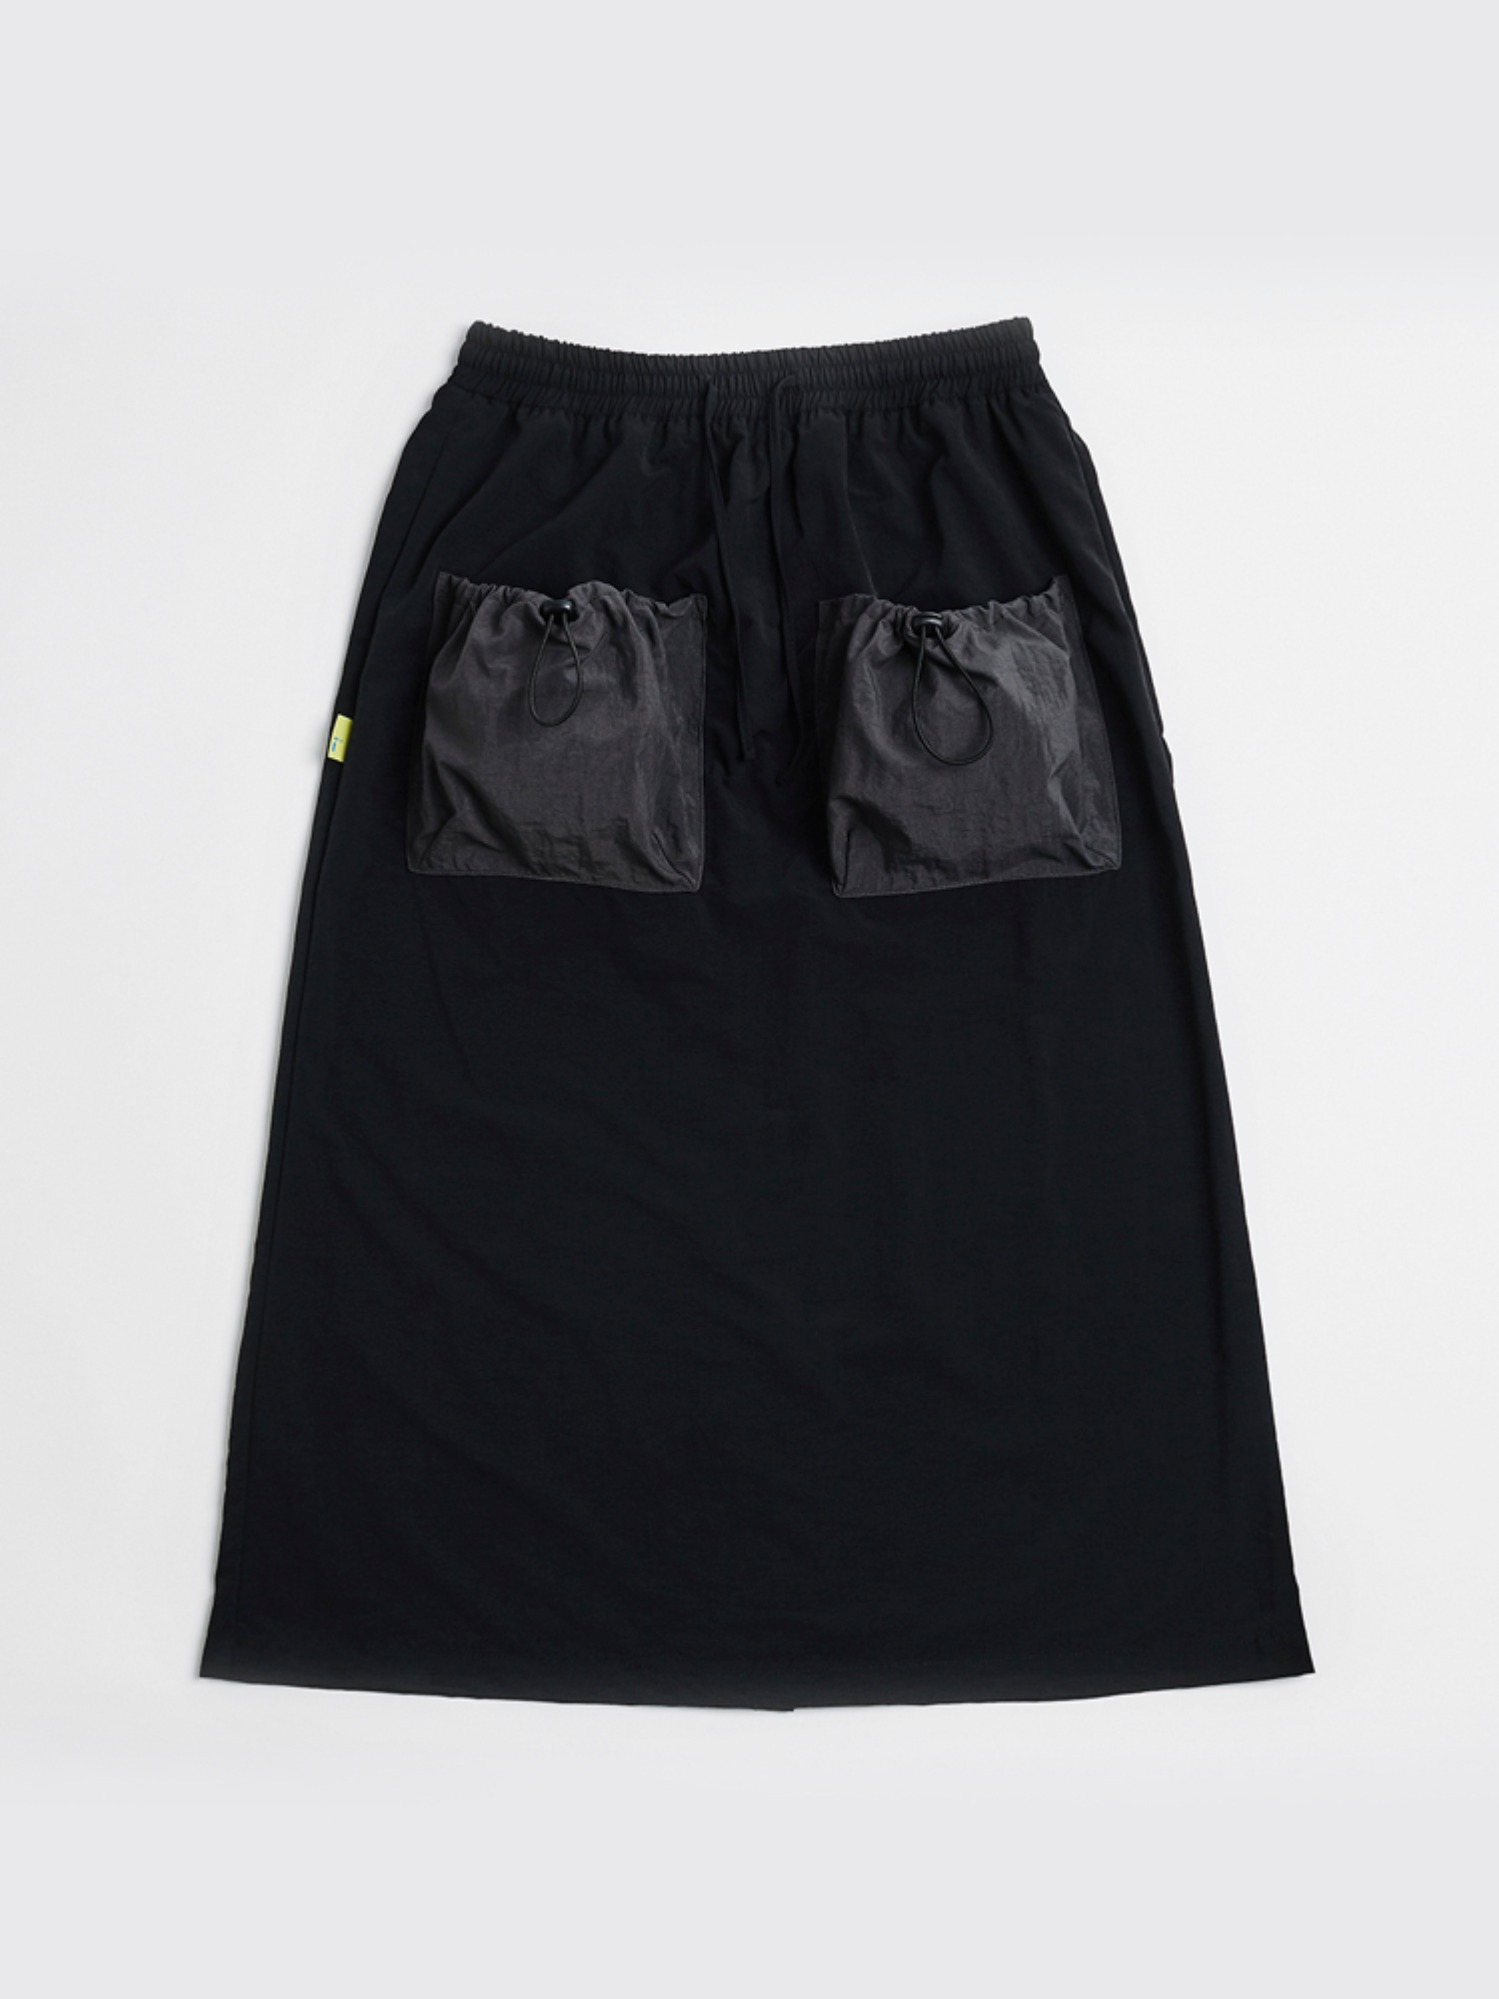 2 Pockets Skirt (Black &amp; Charcoal)